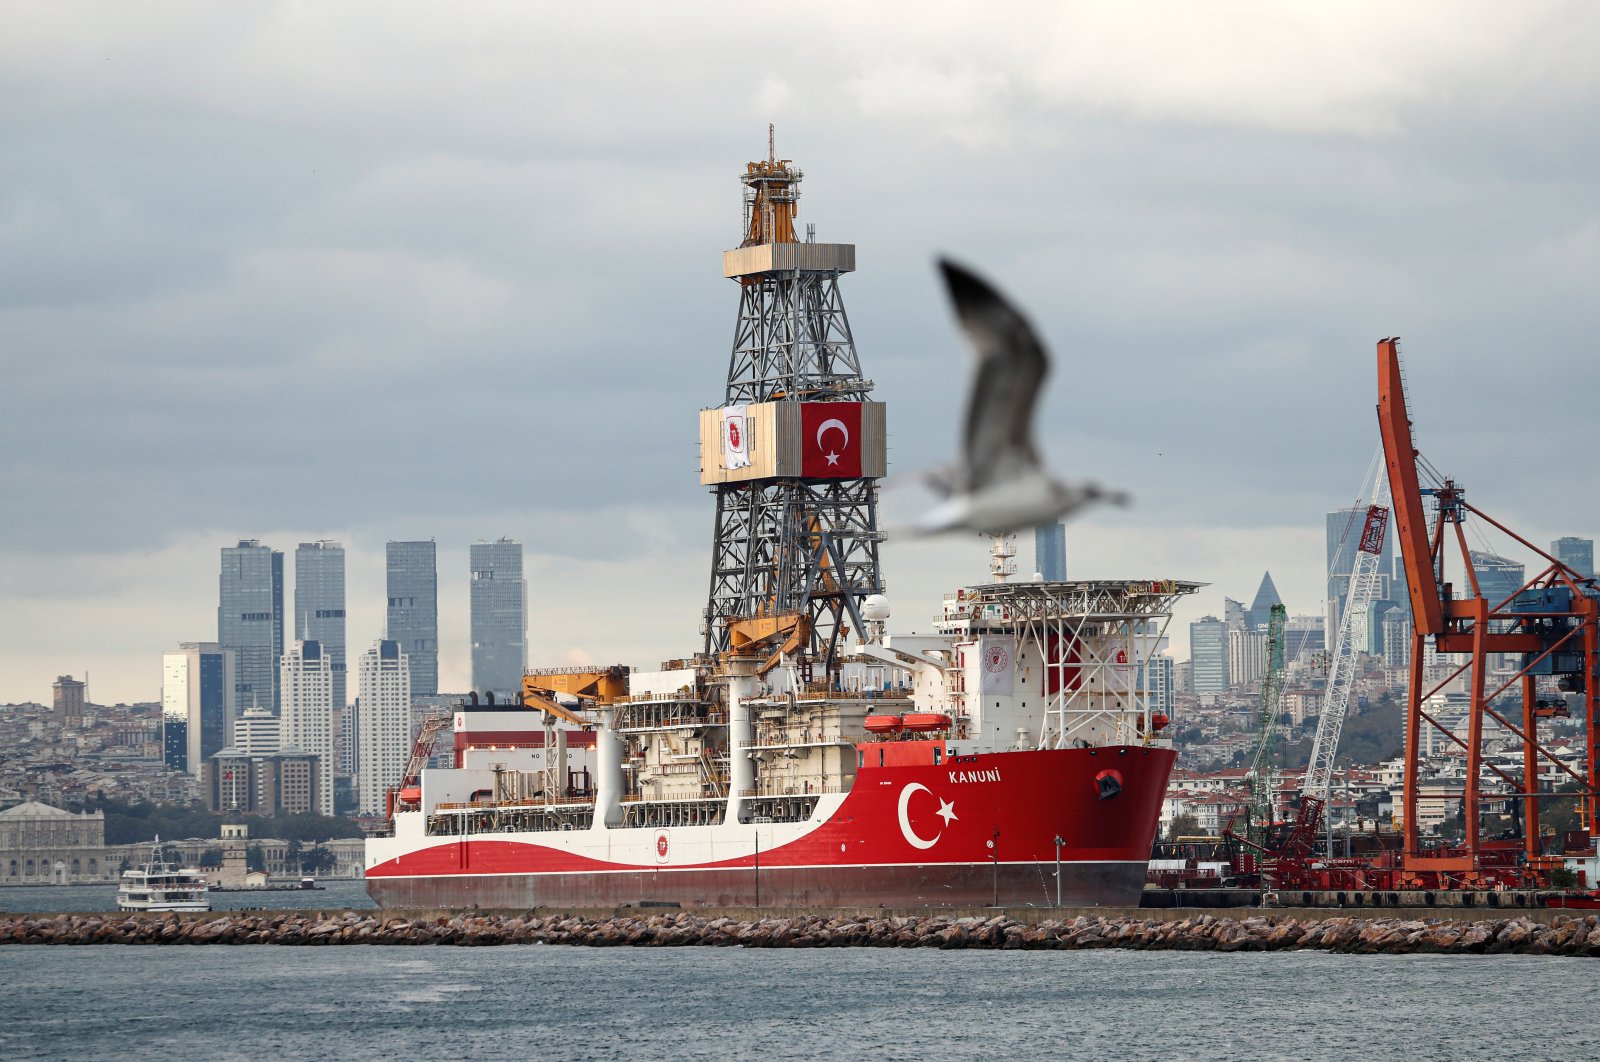 Turkish drilling ship Kanuni is seen at the port of Haydarpaşa in Istanbul, Turkey, Oct. 19, 2020. (Reuters Photo)